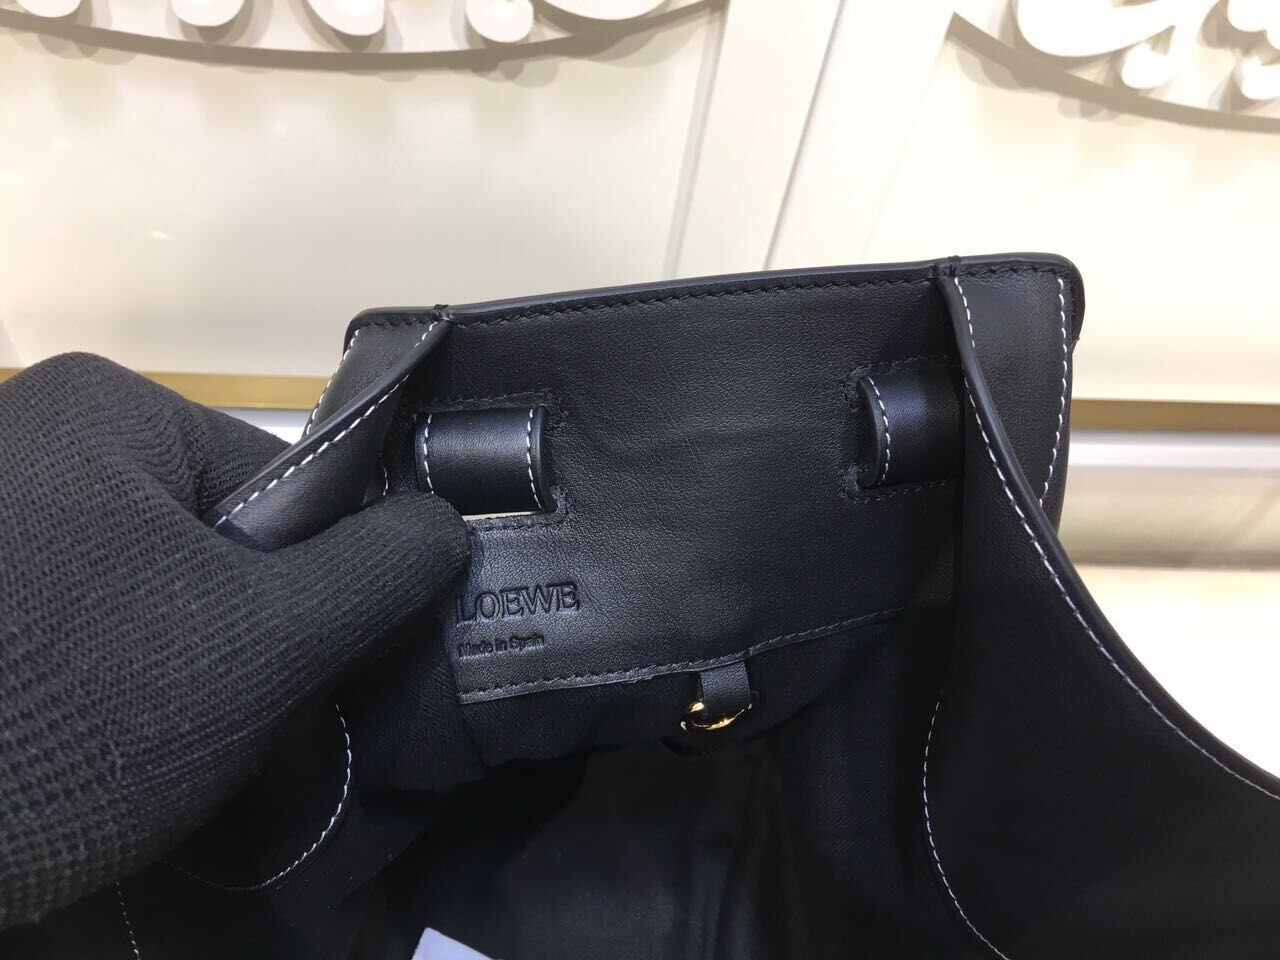 Loewe Hammock Bag Calfskin Leather 1100 Black